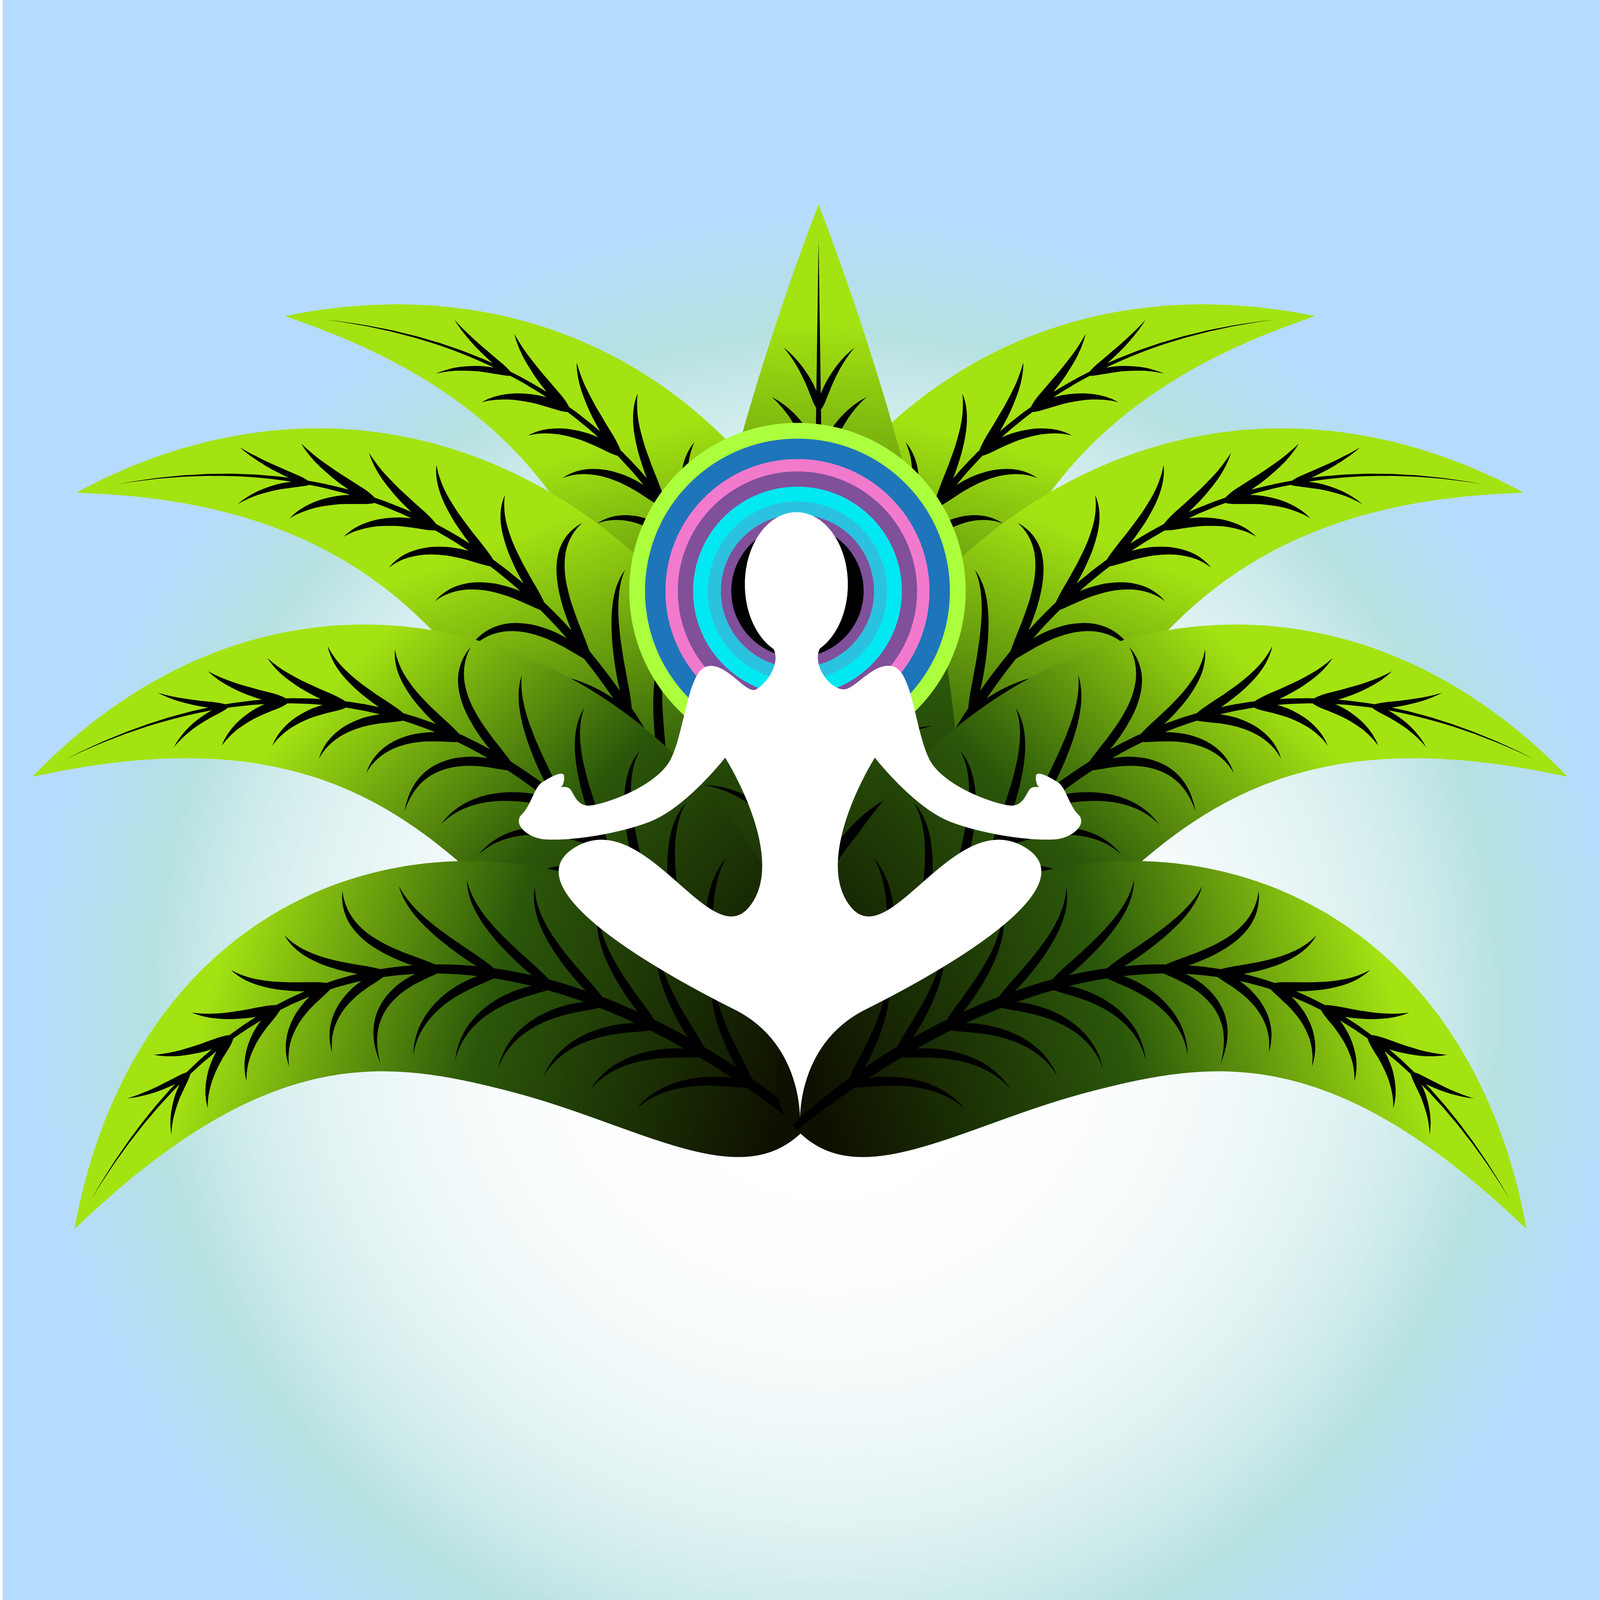 logo naturopathie